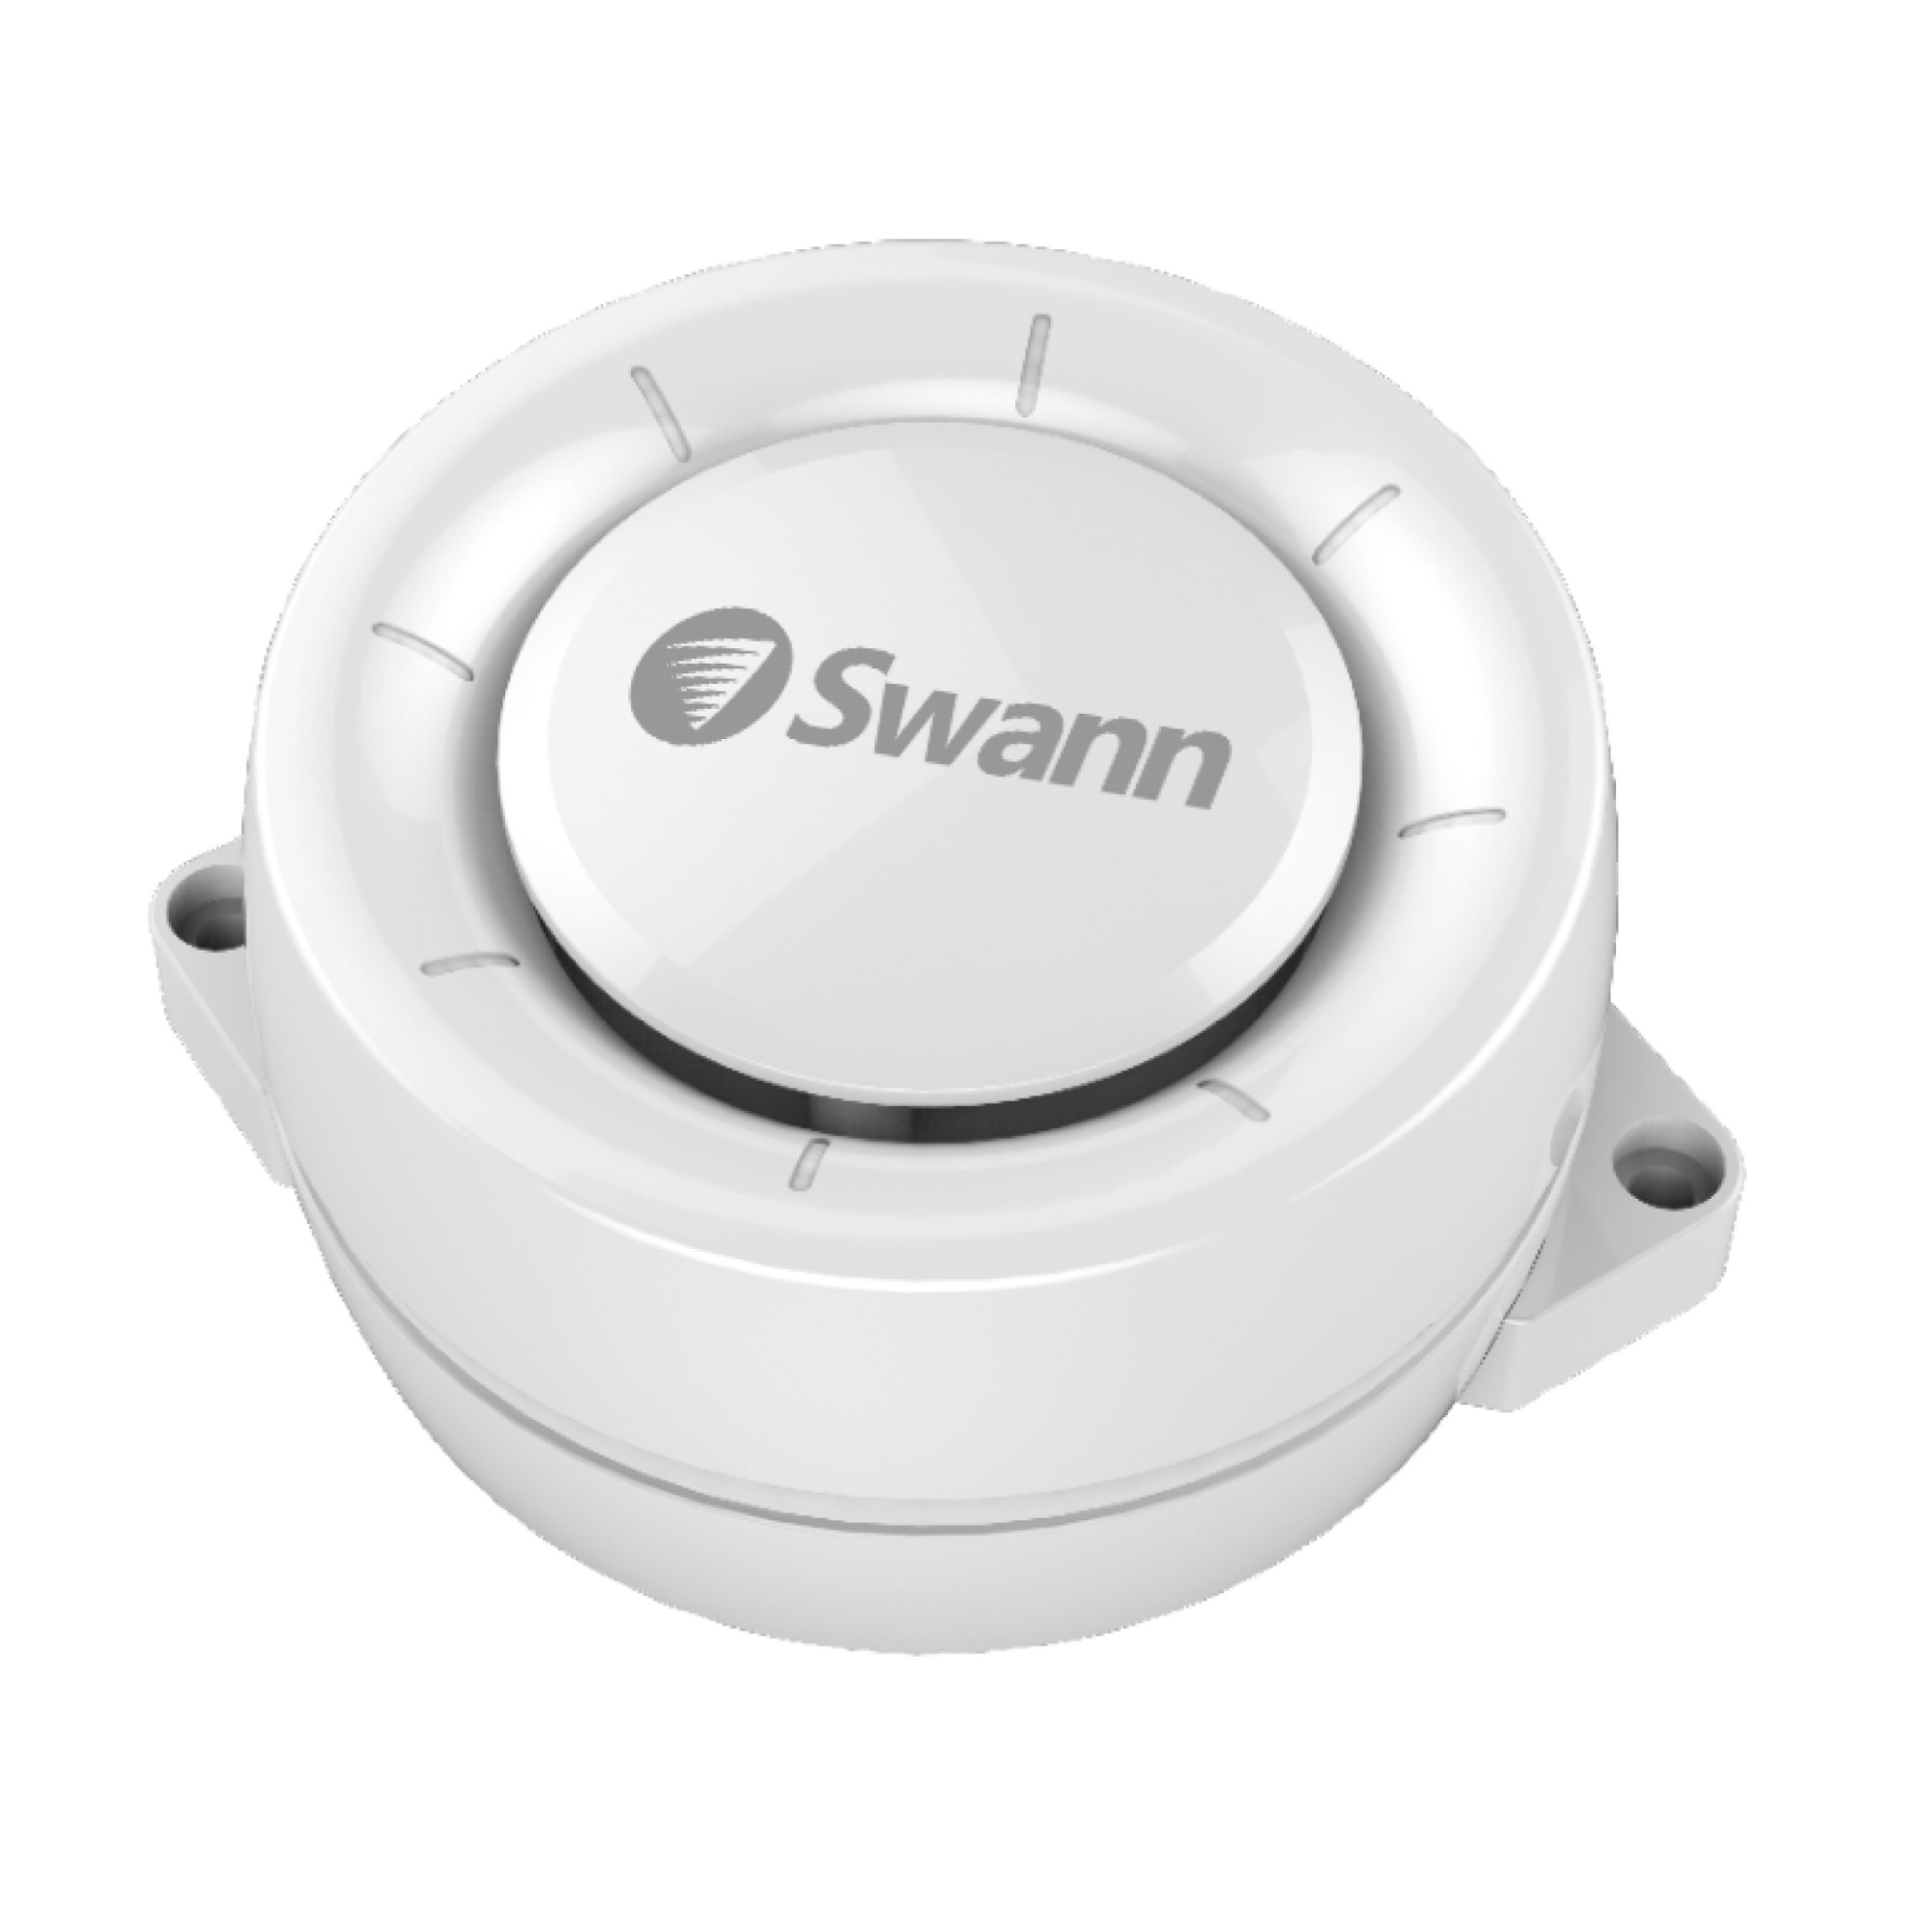 Swann 3P - WiFi Indoor Siren smart home security kit Wi-Fi